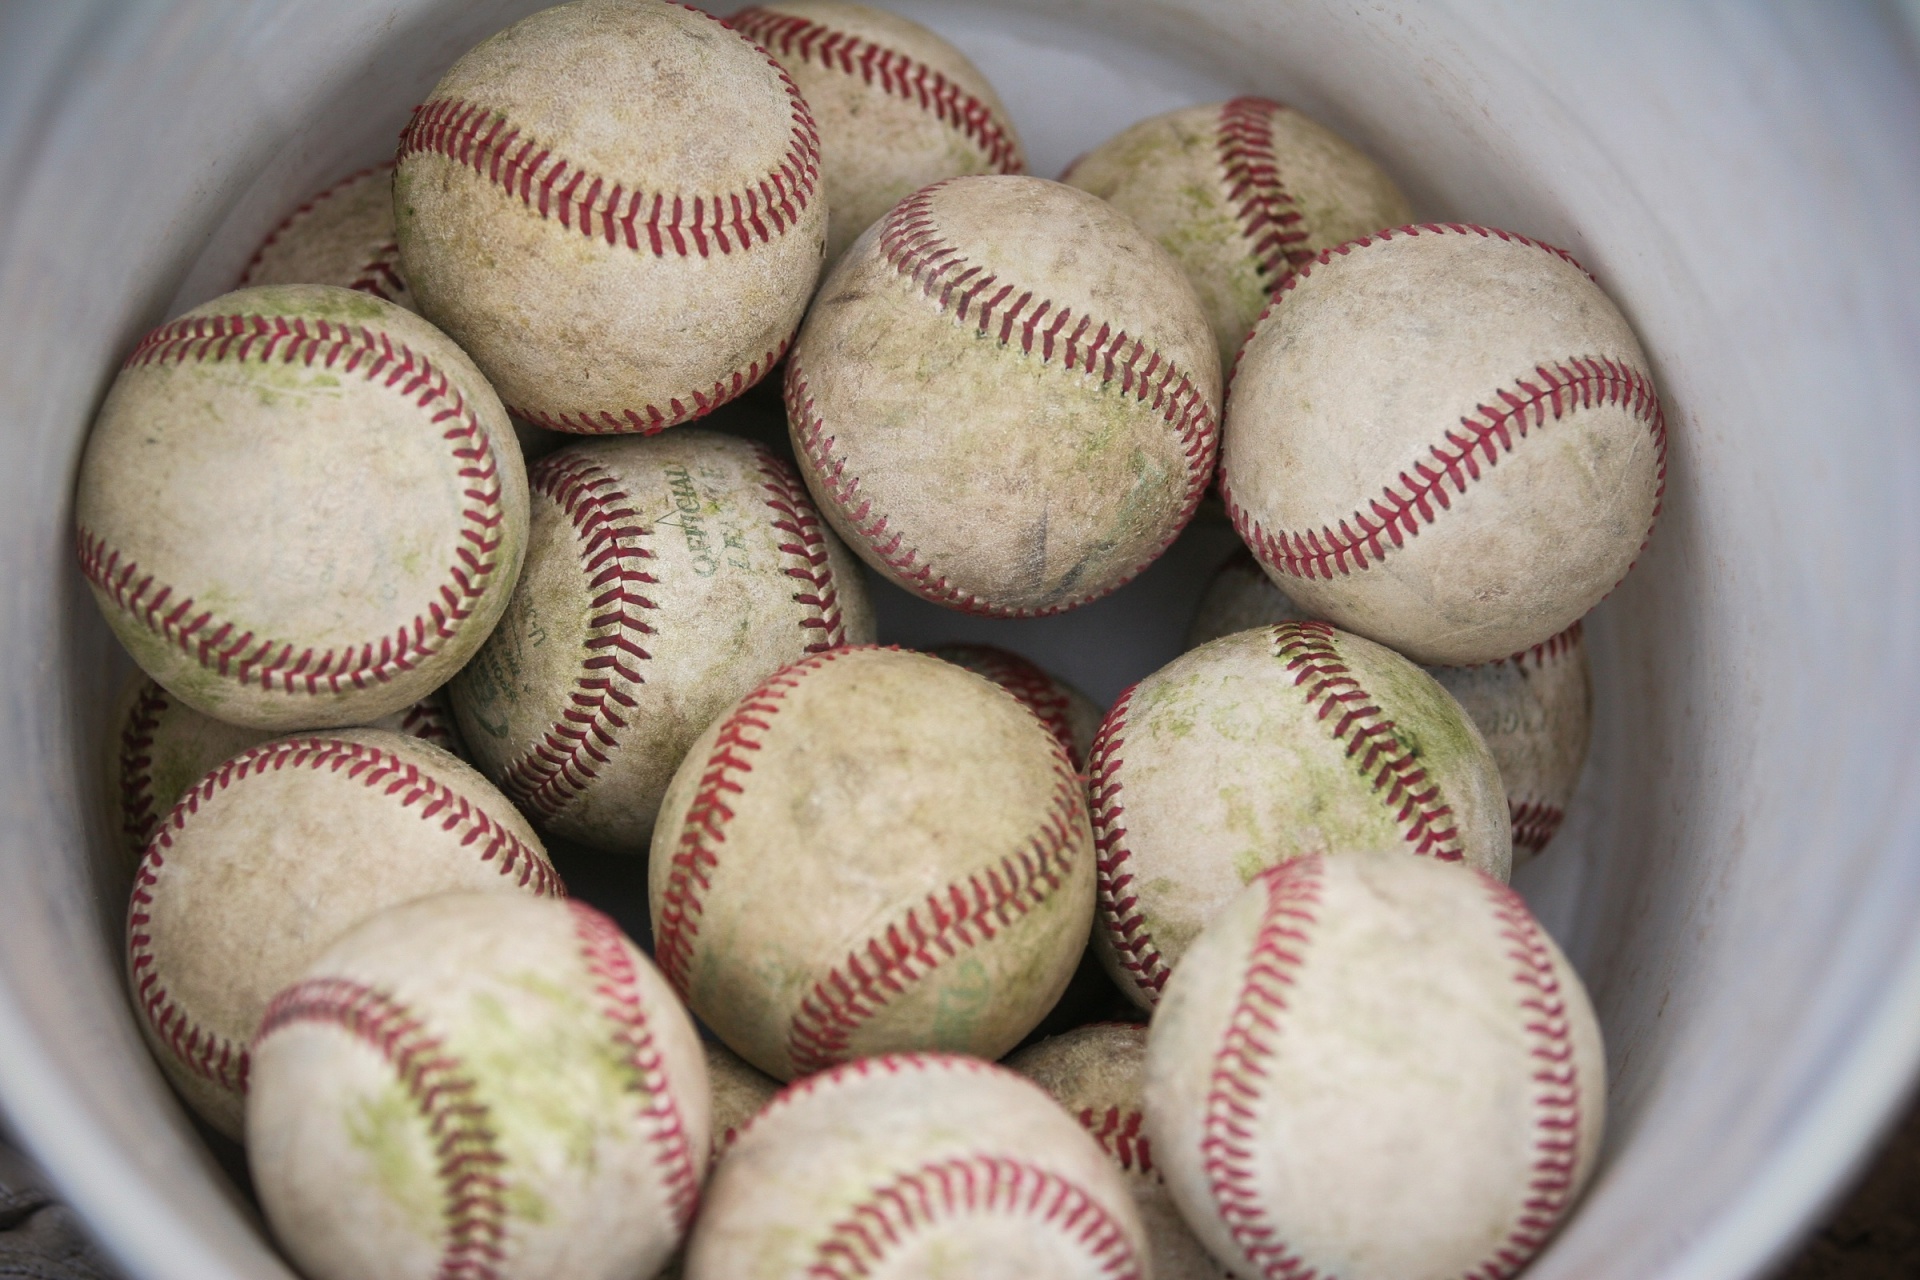 bucket-of-baseballs-free-stock-photo-public-domain-pictures